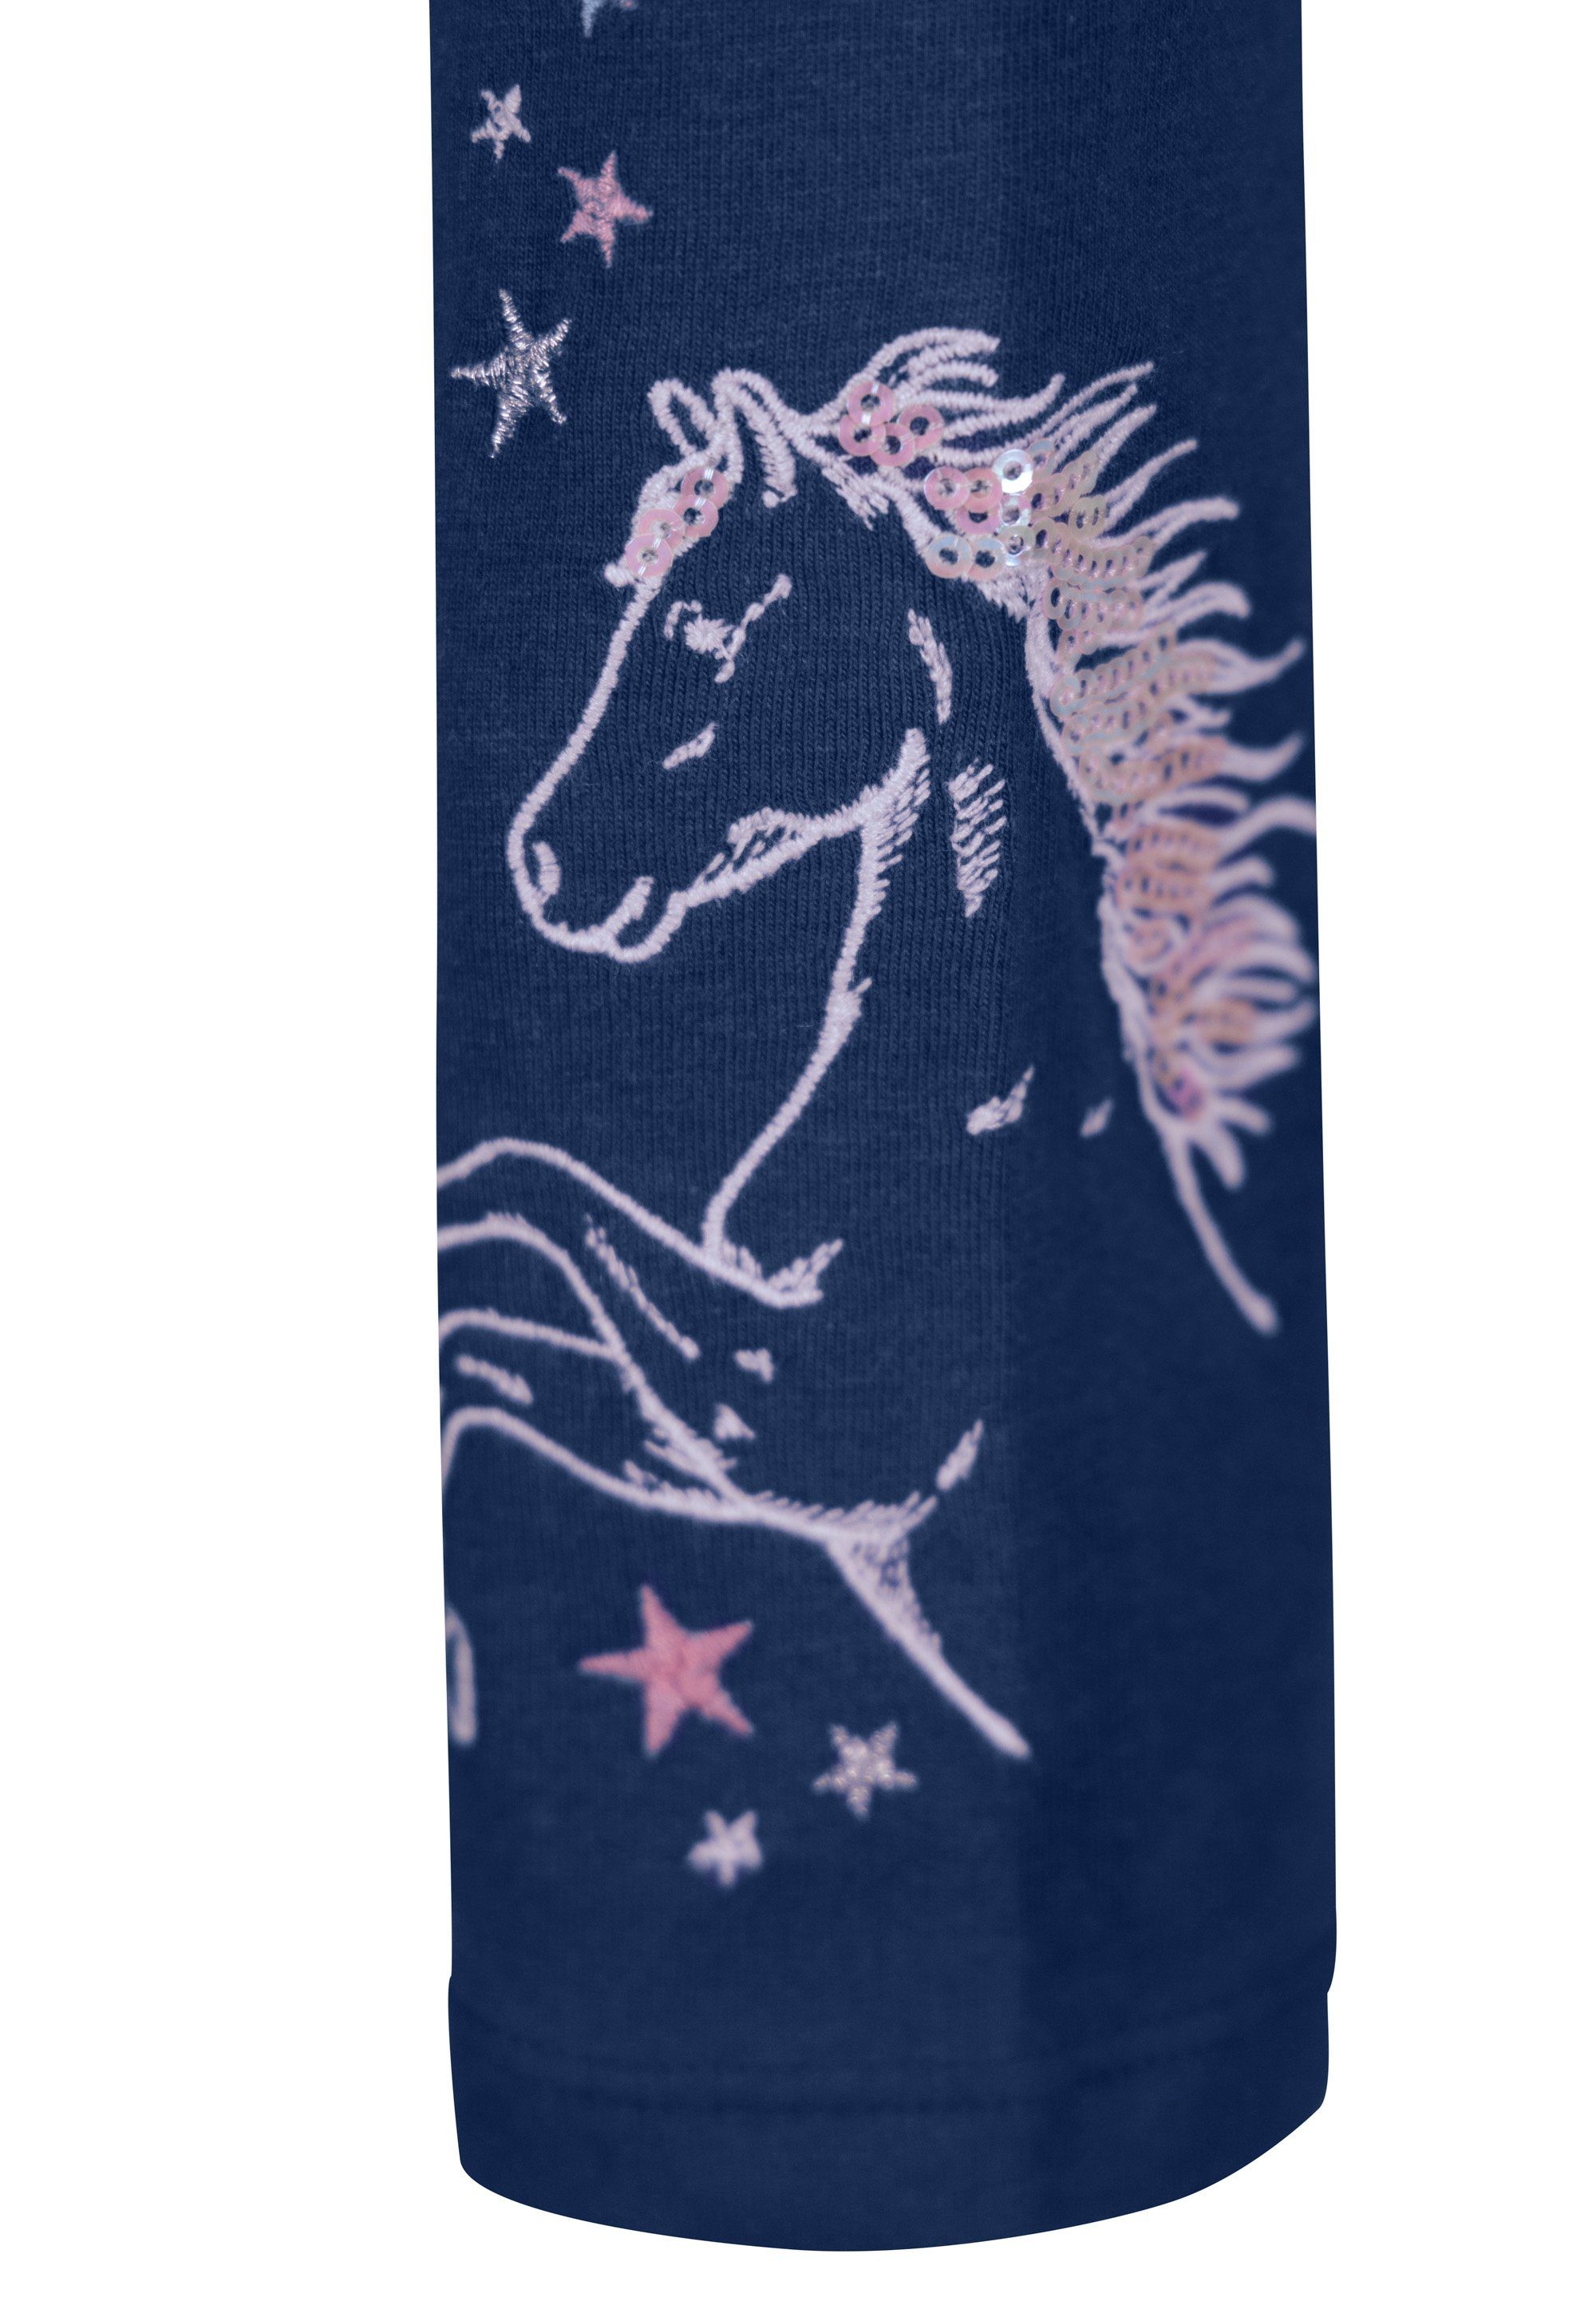 SALT AND PEPPER Leggings Bloom Spring Pferde-Stickerei dunkelblau mit